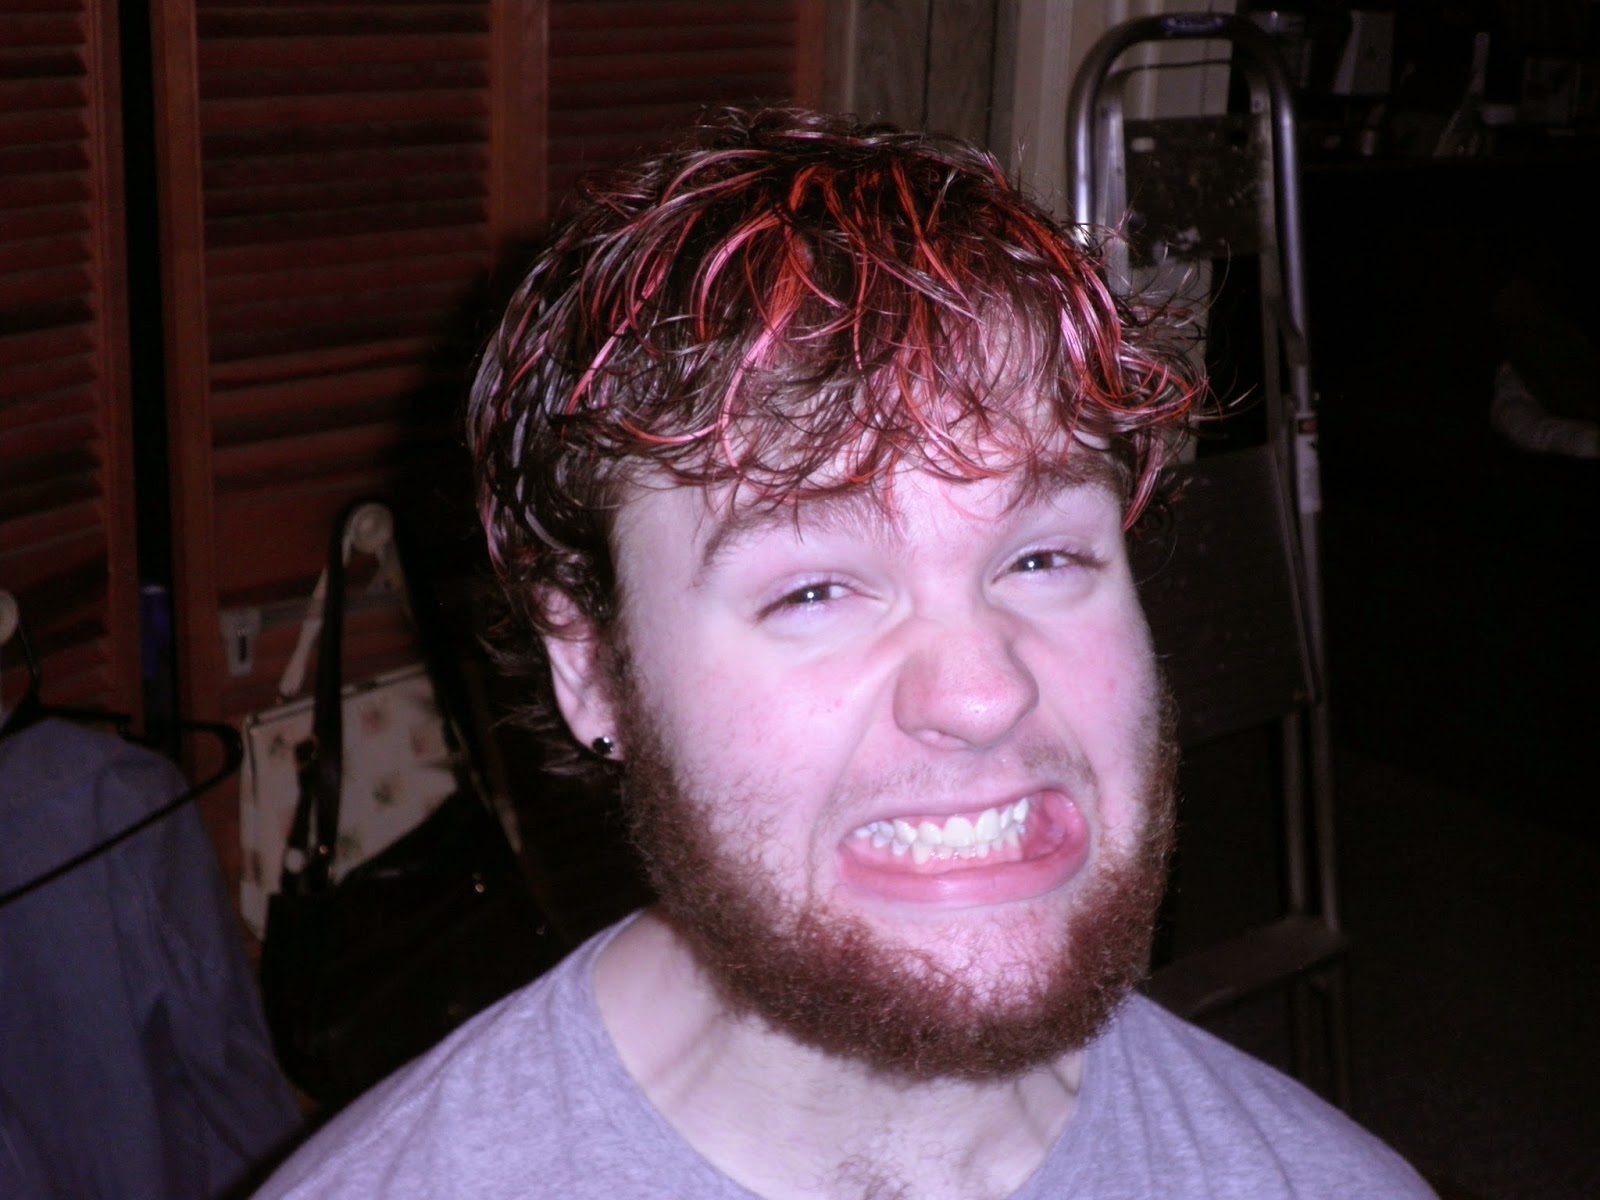 Blue Hair Pink Beard Guy - Pinterest - wide 5